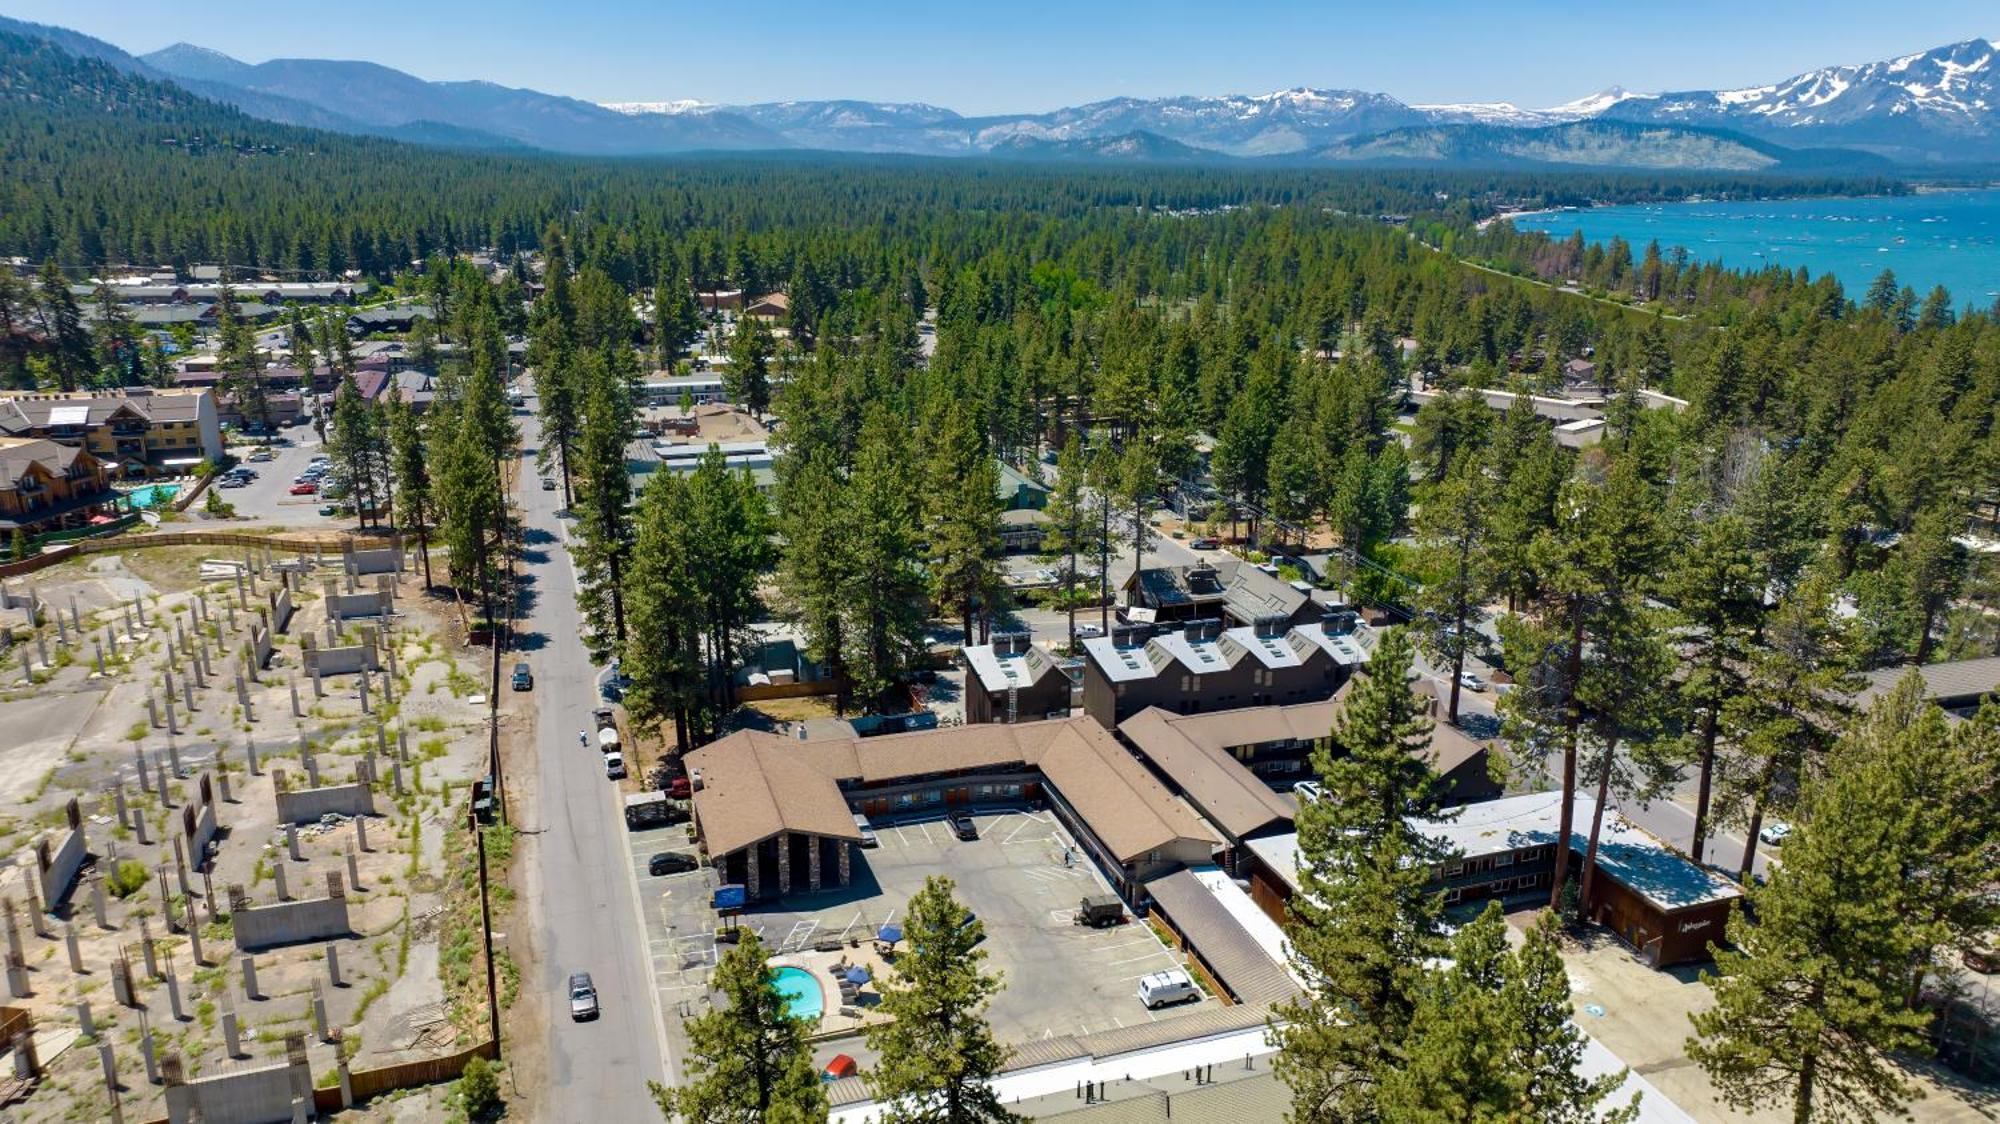 Blue Jay Lodge South Lake Tahoe Exterior photo